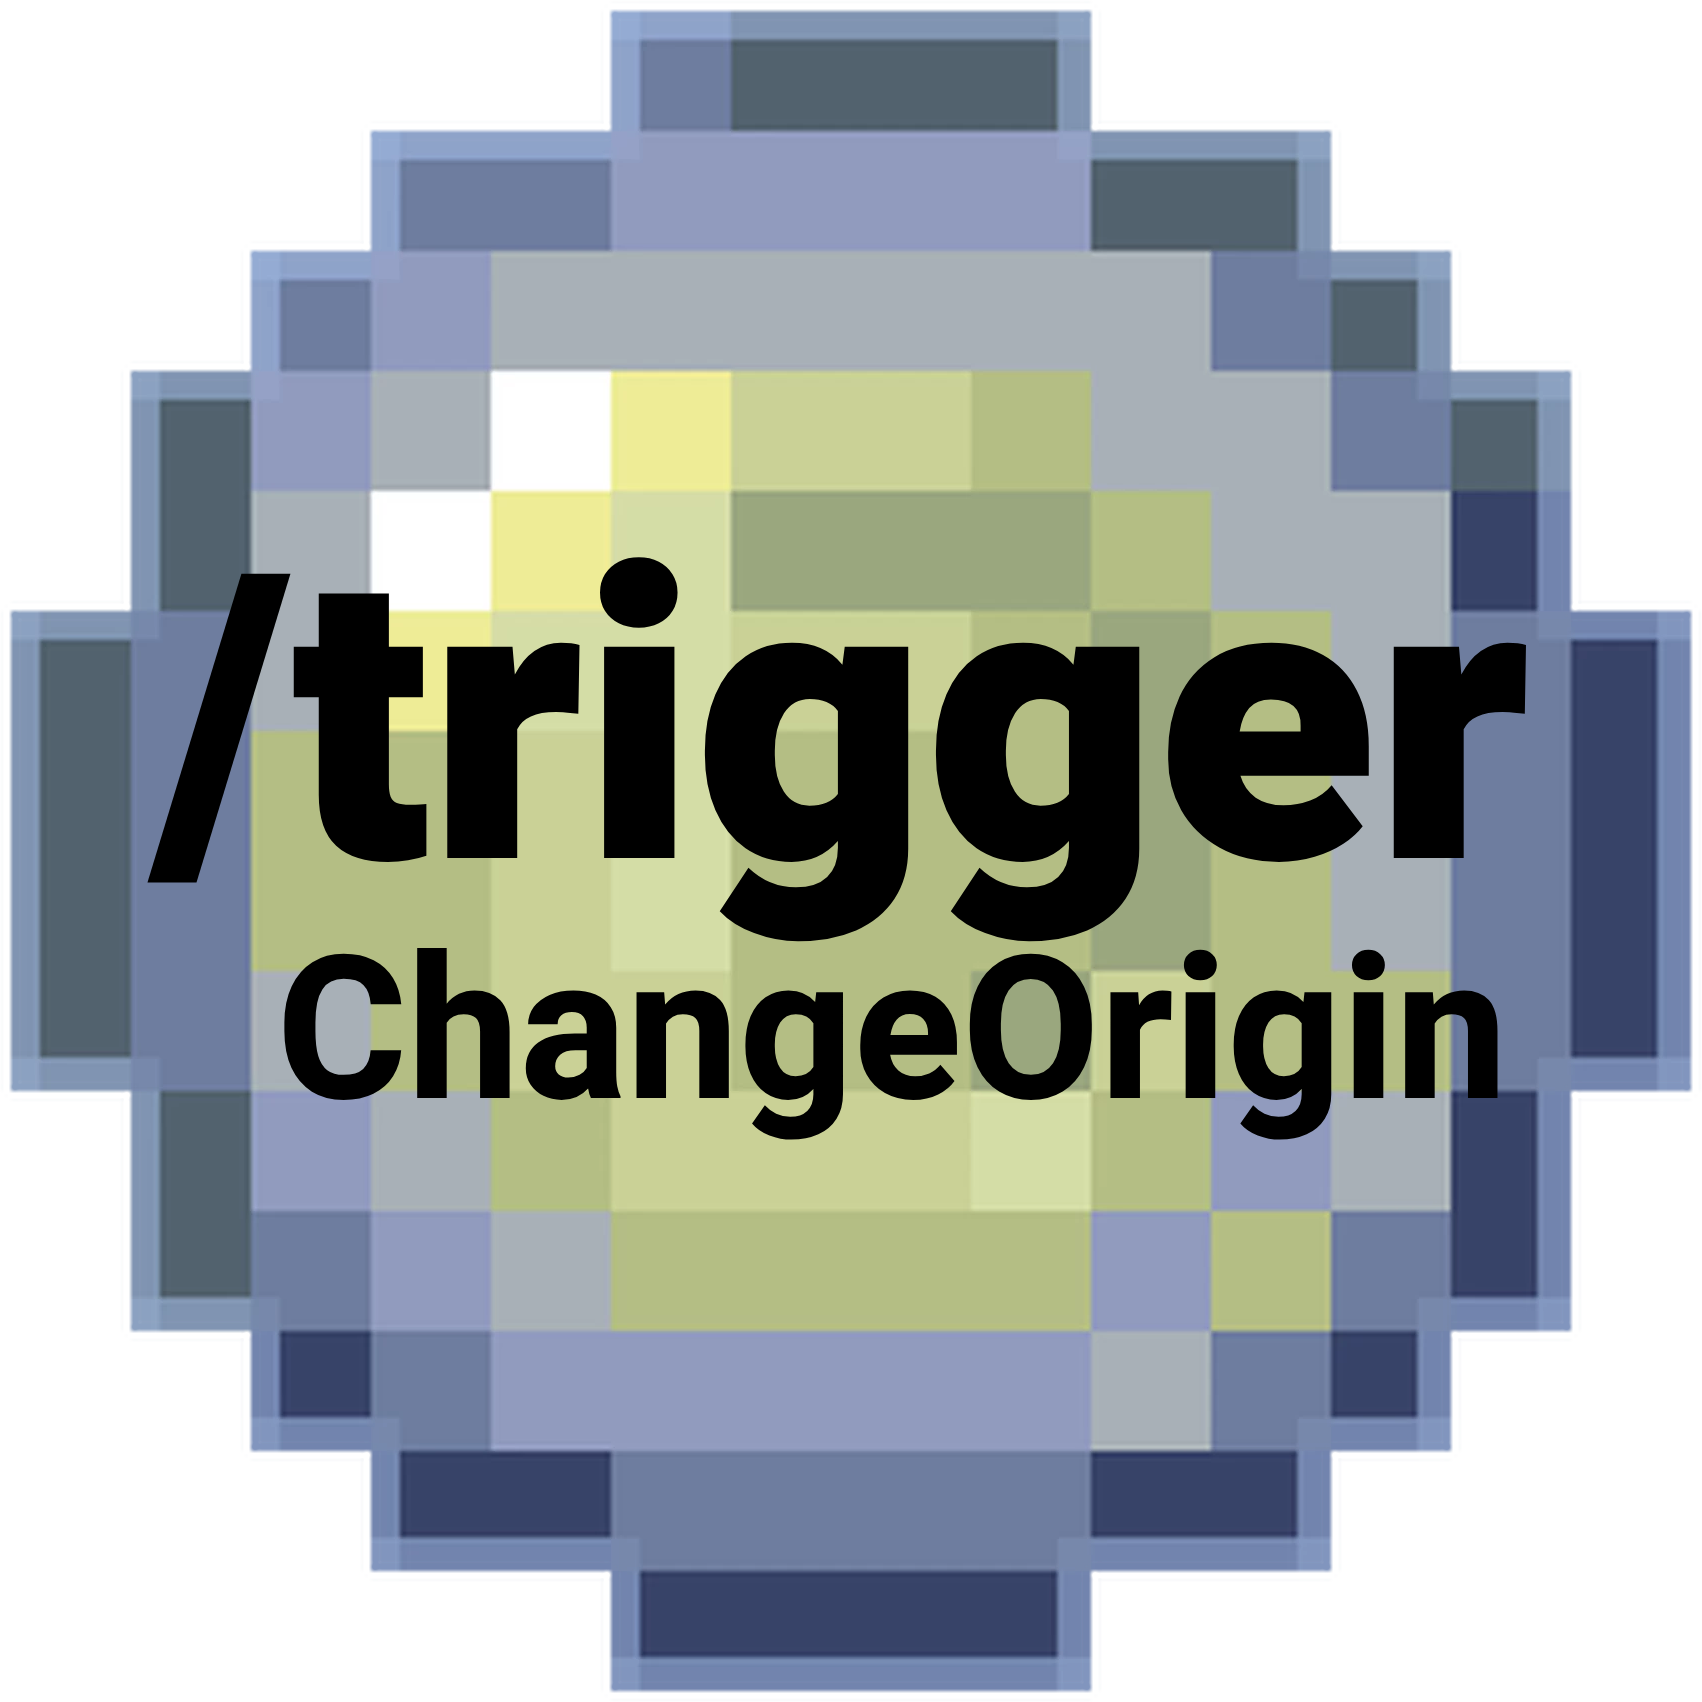 /trigger ChangeOrigin